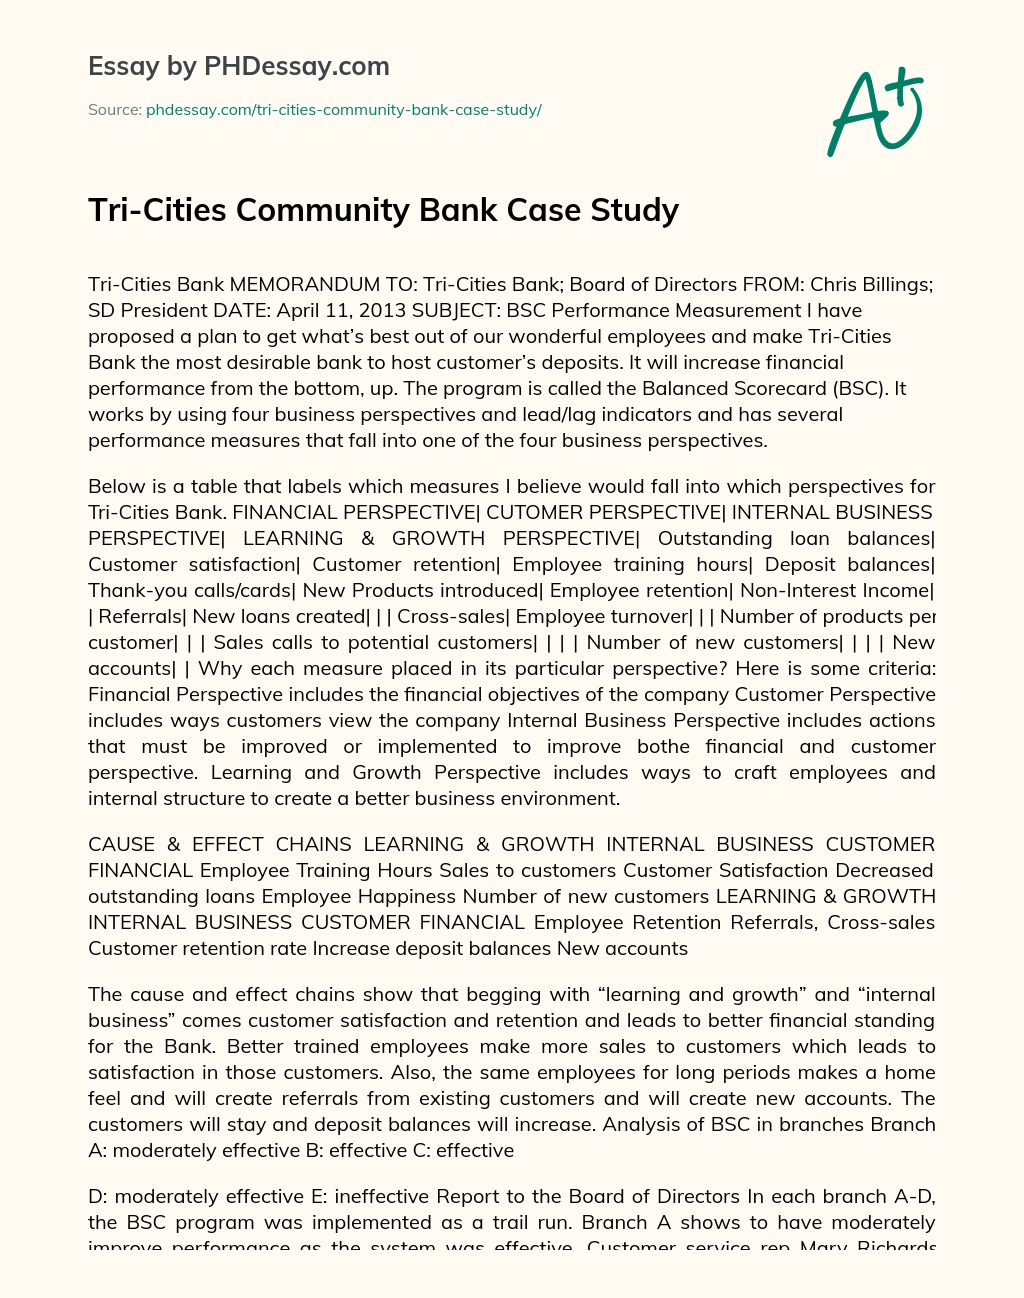 Tri-Cities Community Bank Case Study essay